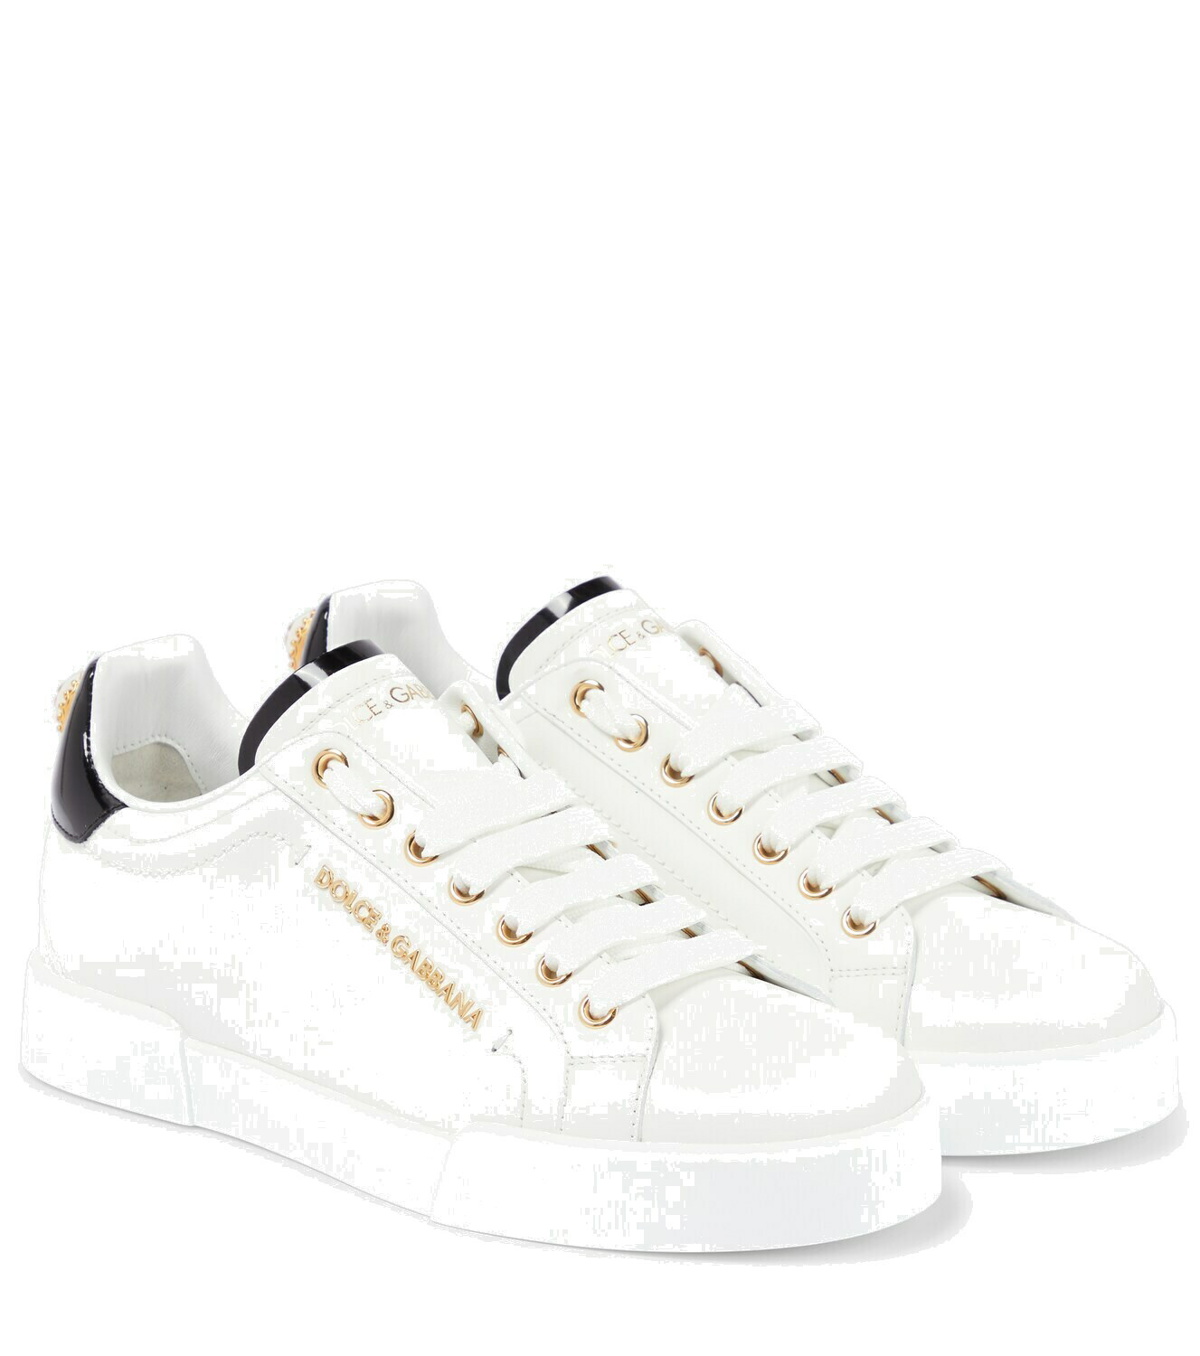 Dolce&Gabbana - Portofino leather sneakers Dolce & Gabbana